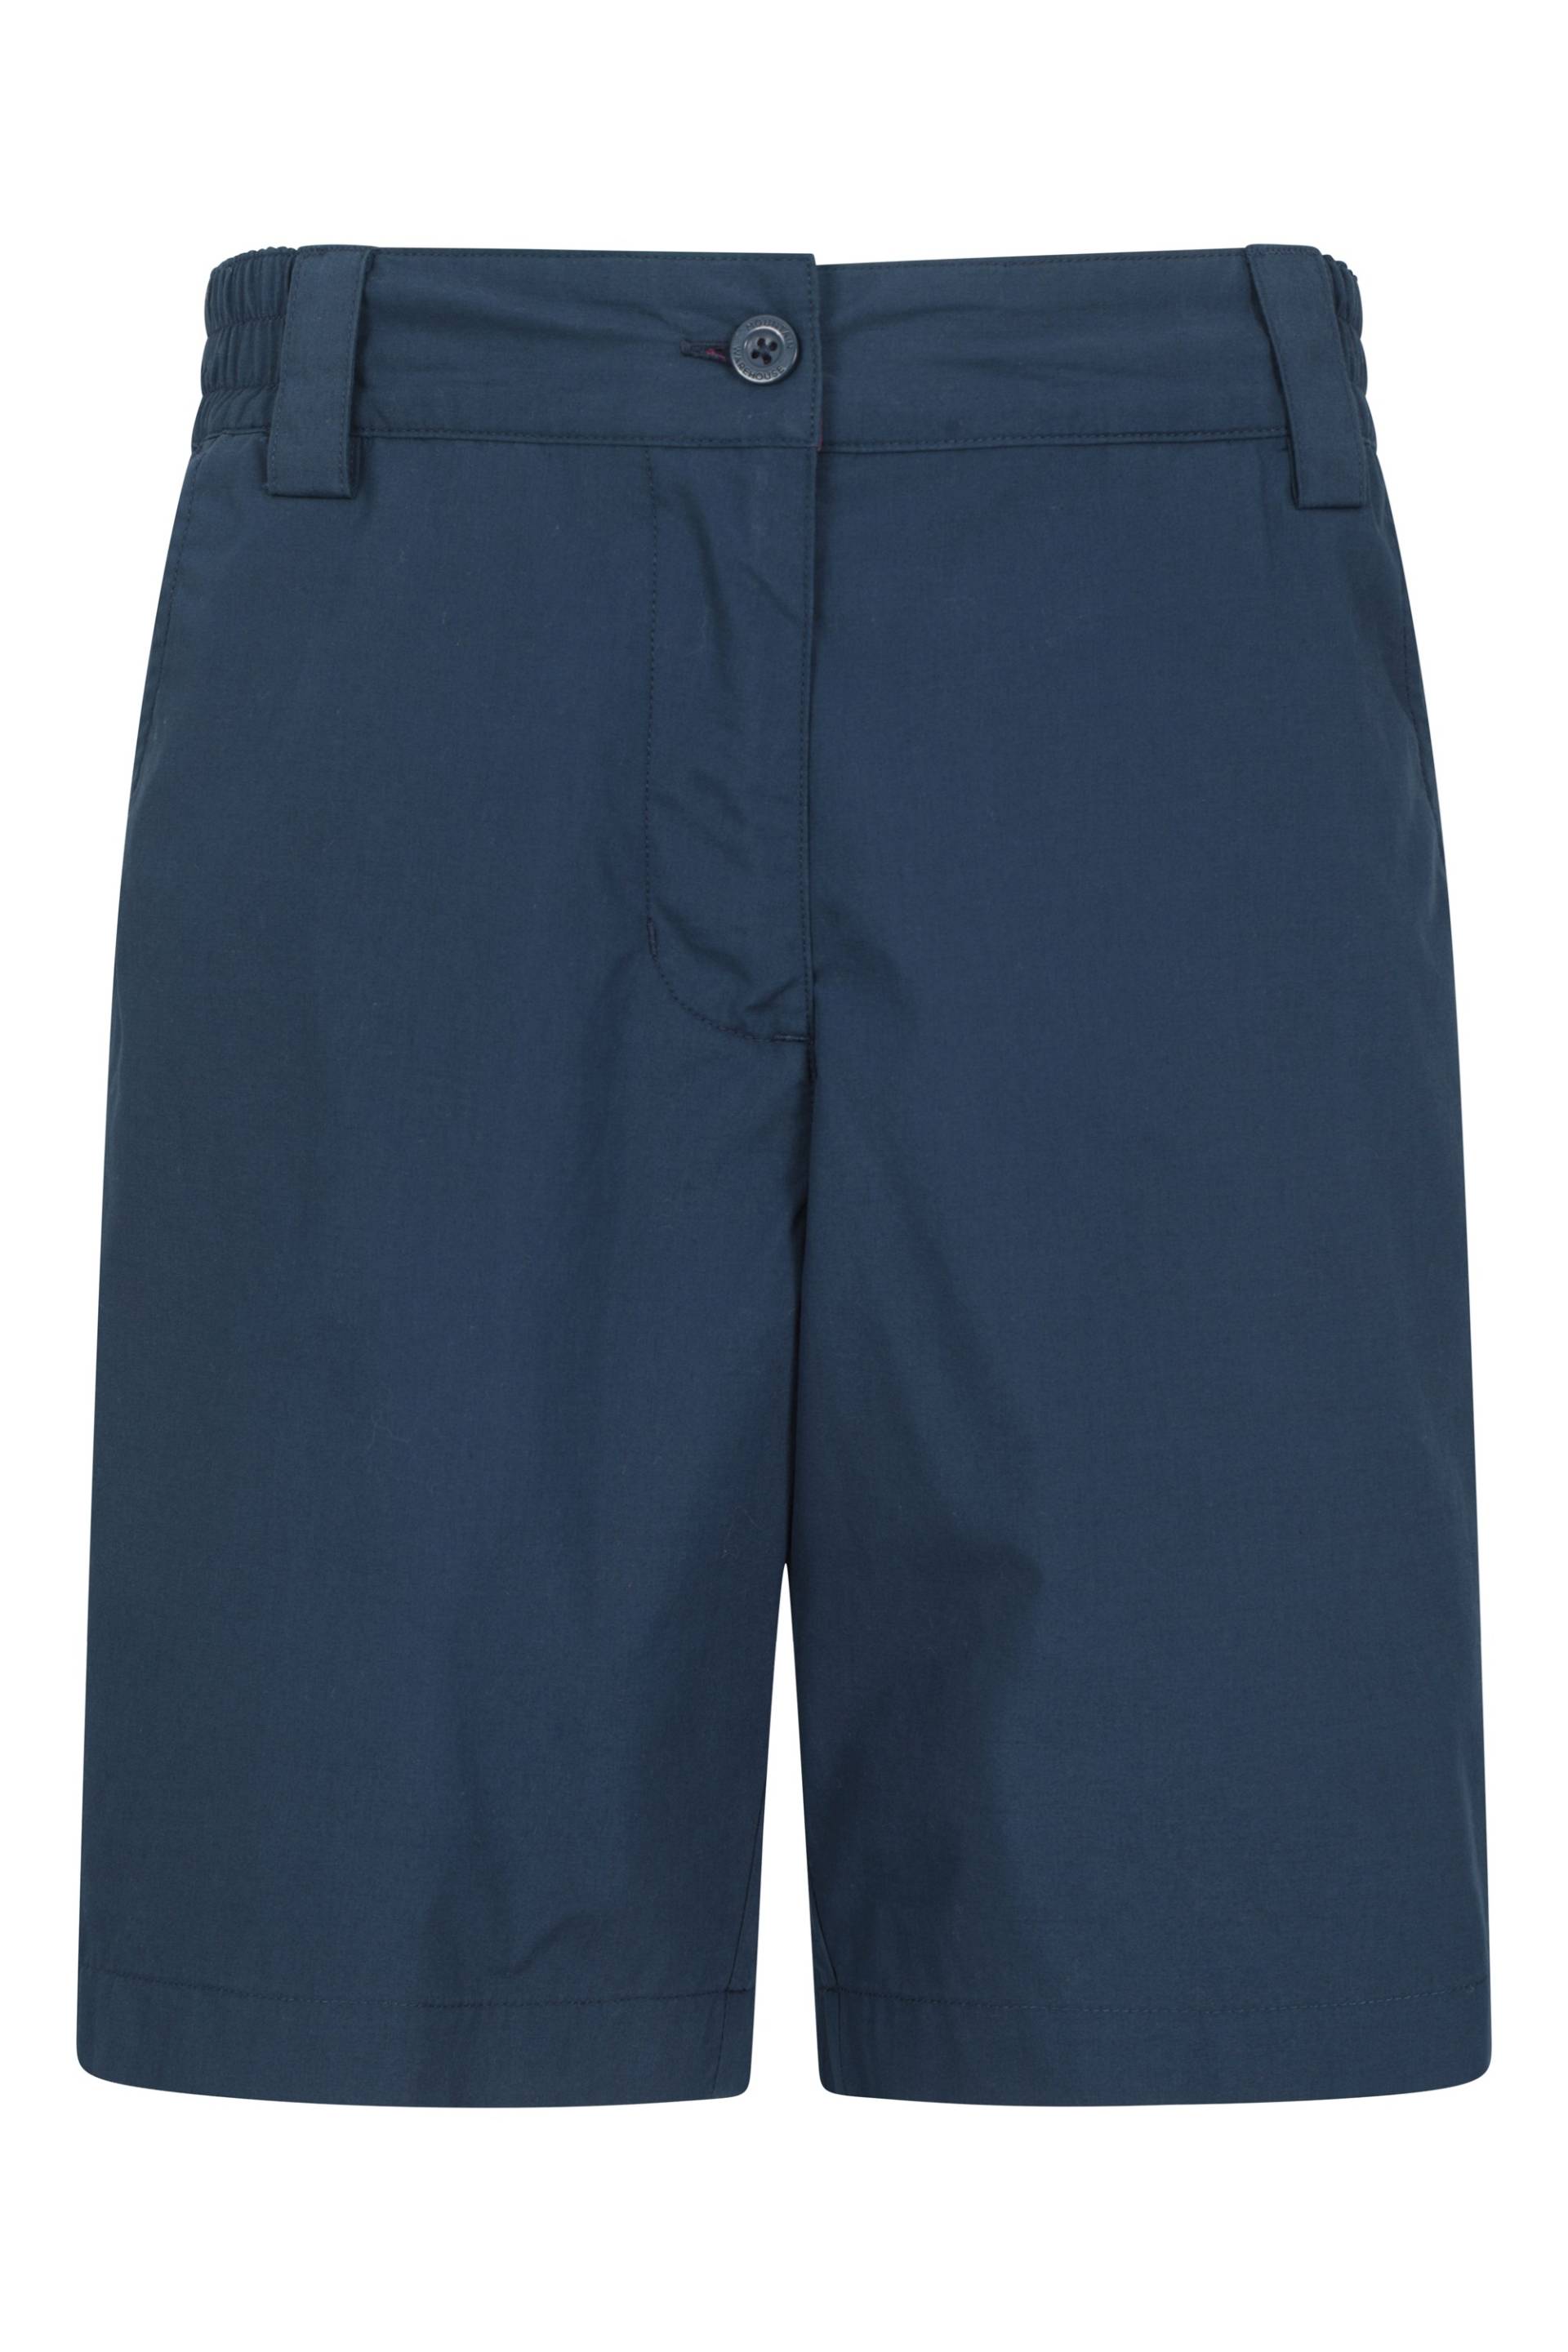 Quest Damen-Shorts - Marineblau von Mountain Warehouse